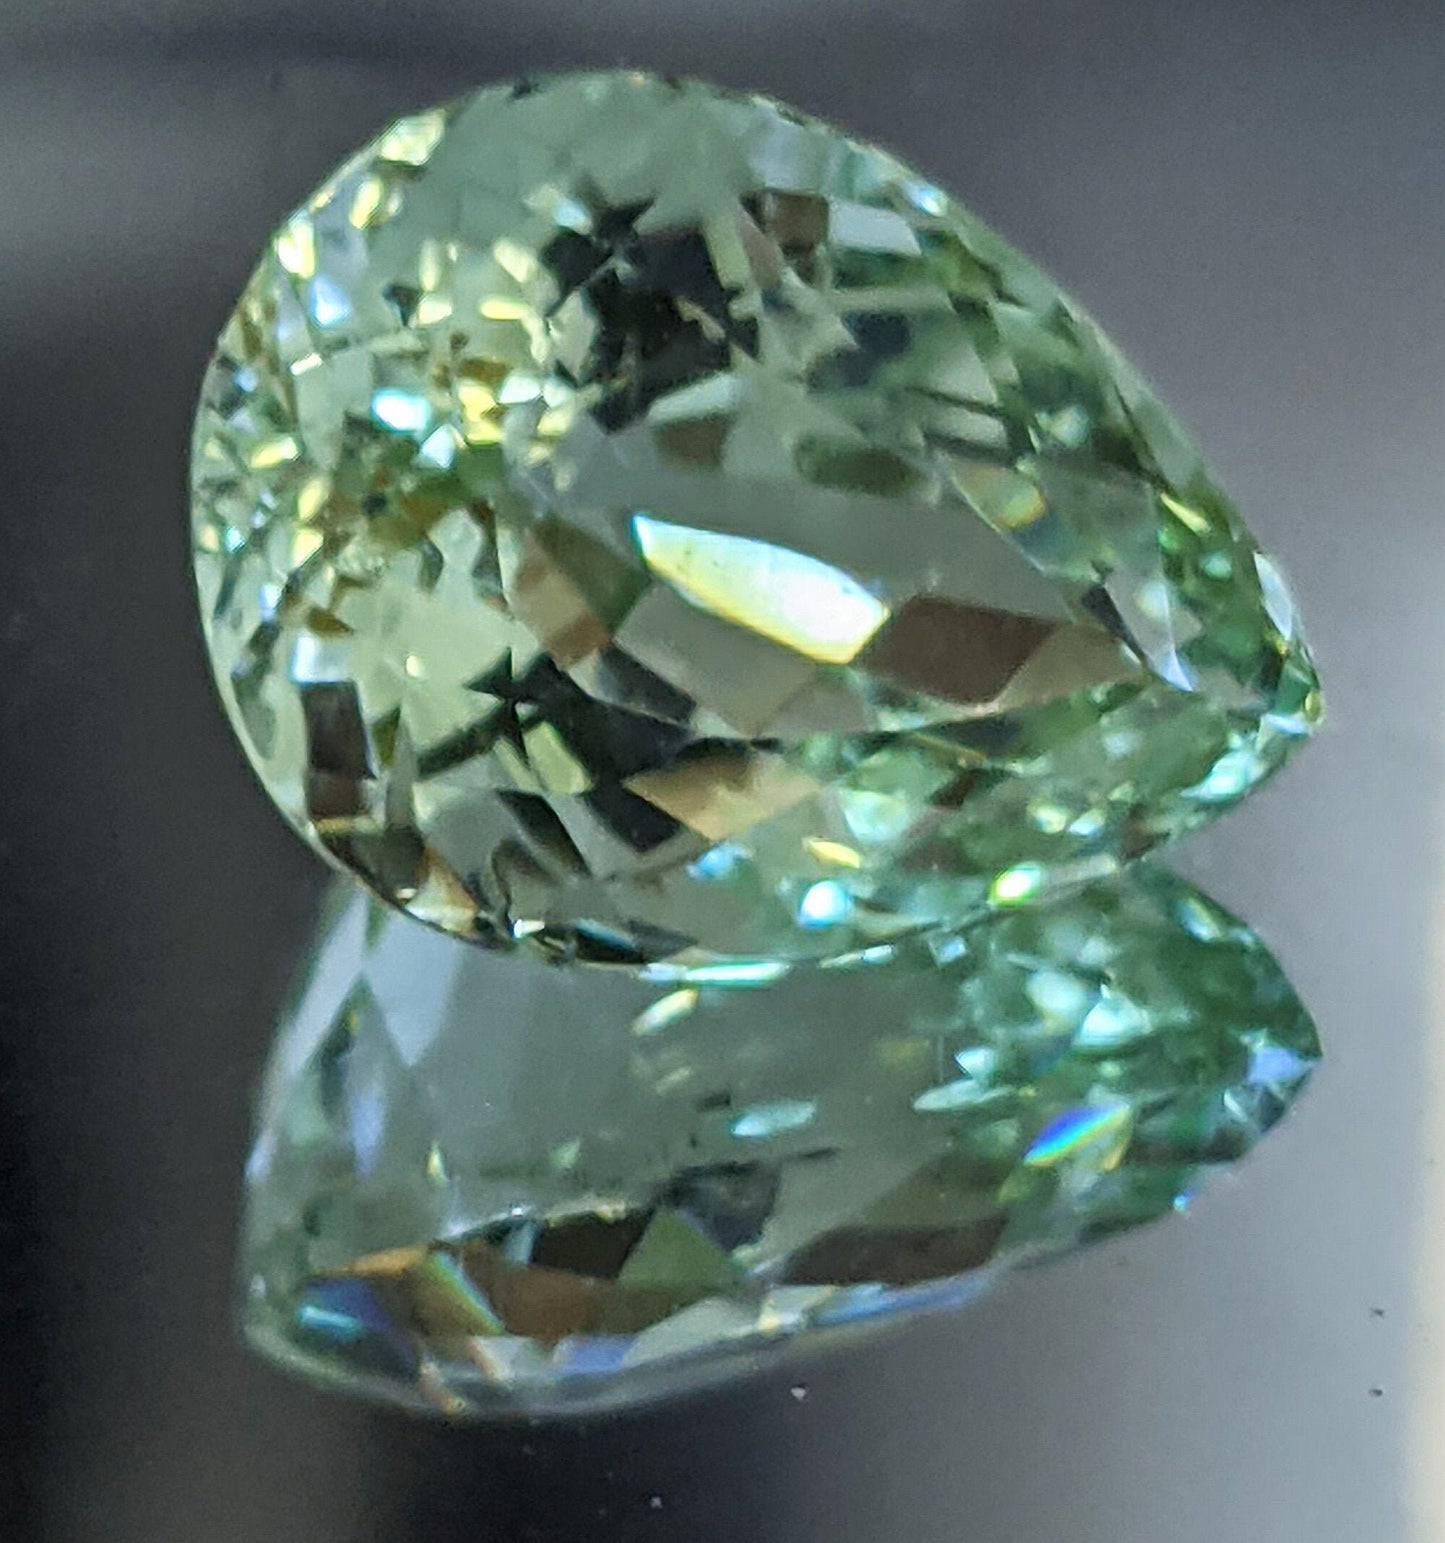 RARE and BEAUTIFUL exotic 19.07 carat mint-green Beryl gem from Brazil.